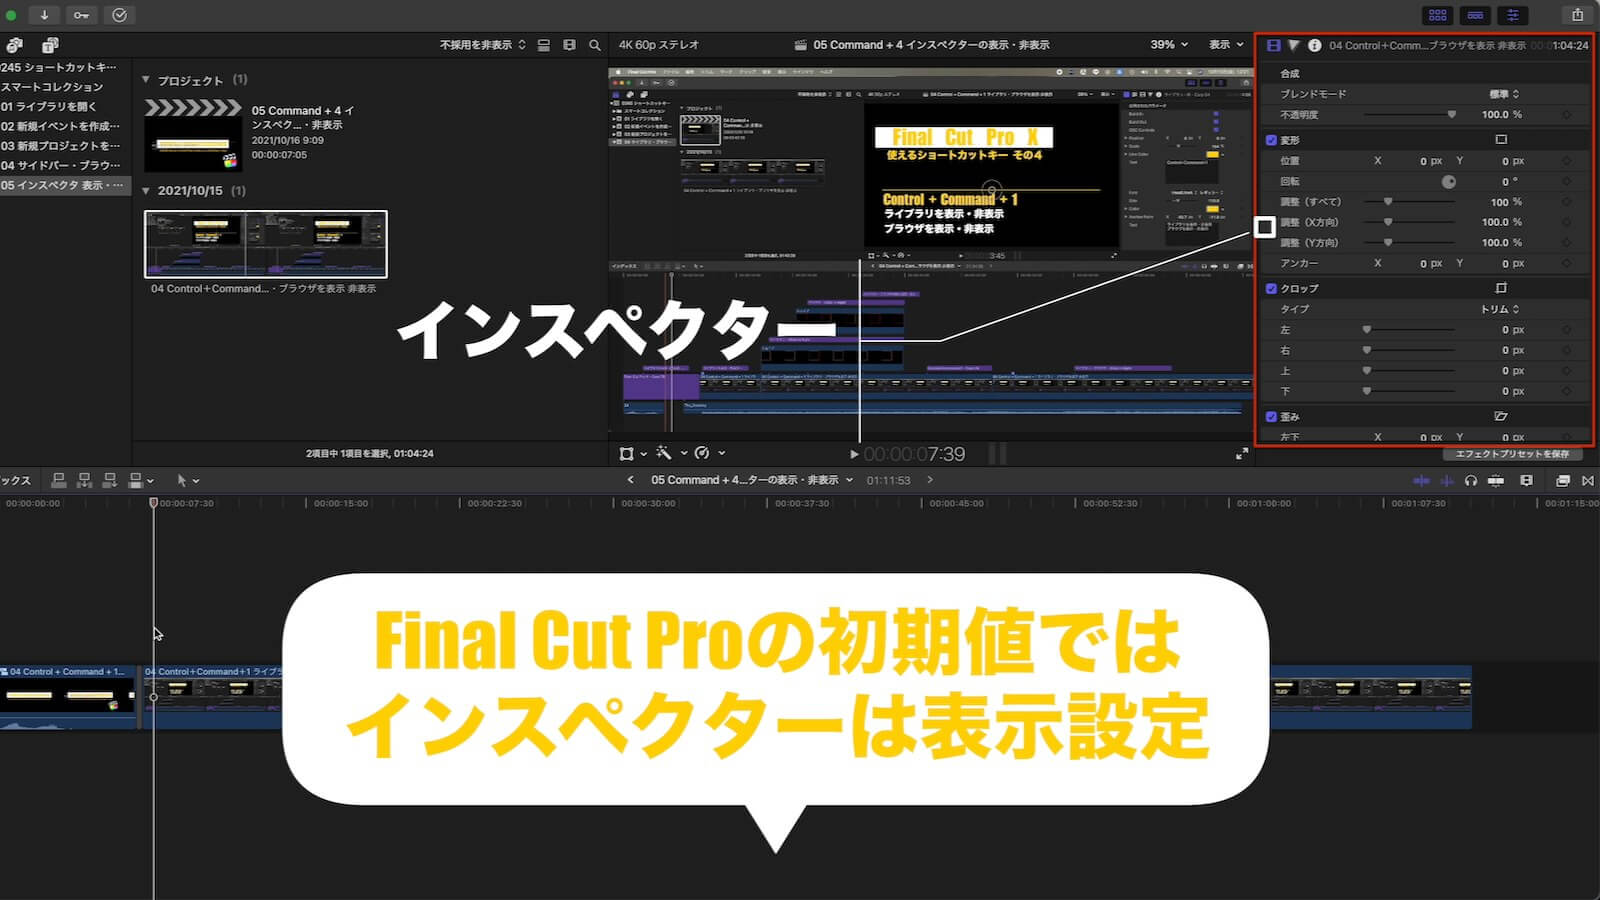 Final Cut Pro Video Inspector Display Screen